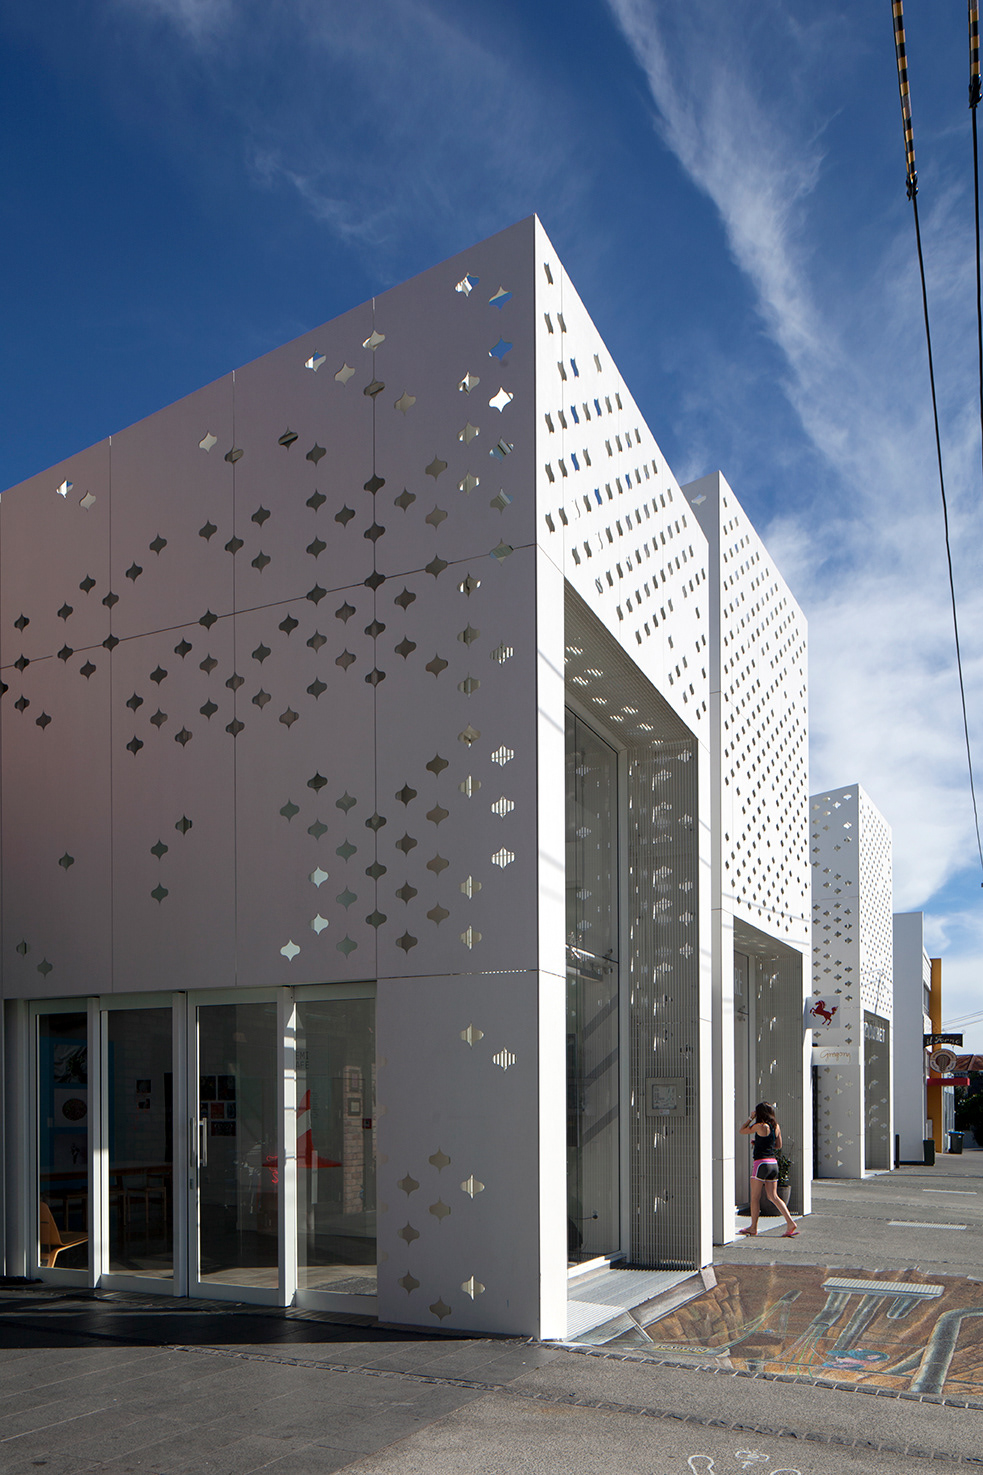 Shops new building temporary White metal pattern newzealand auckland architectrure design Urban Street sculpture facade